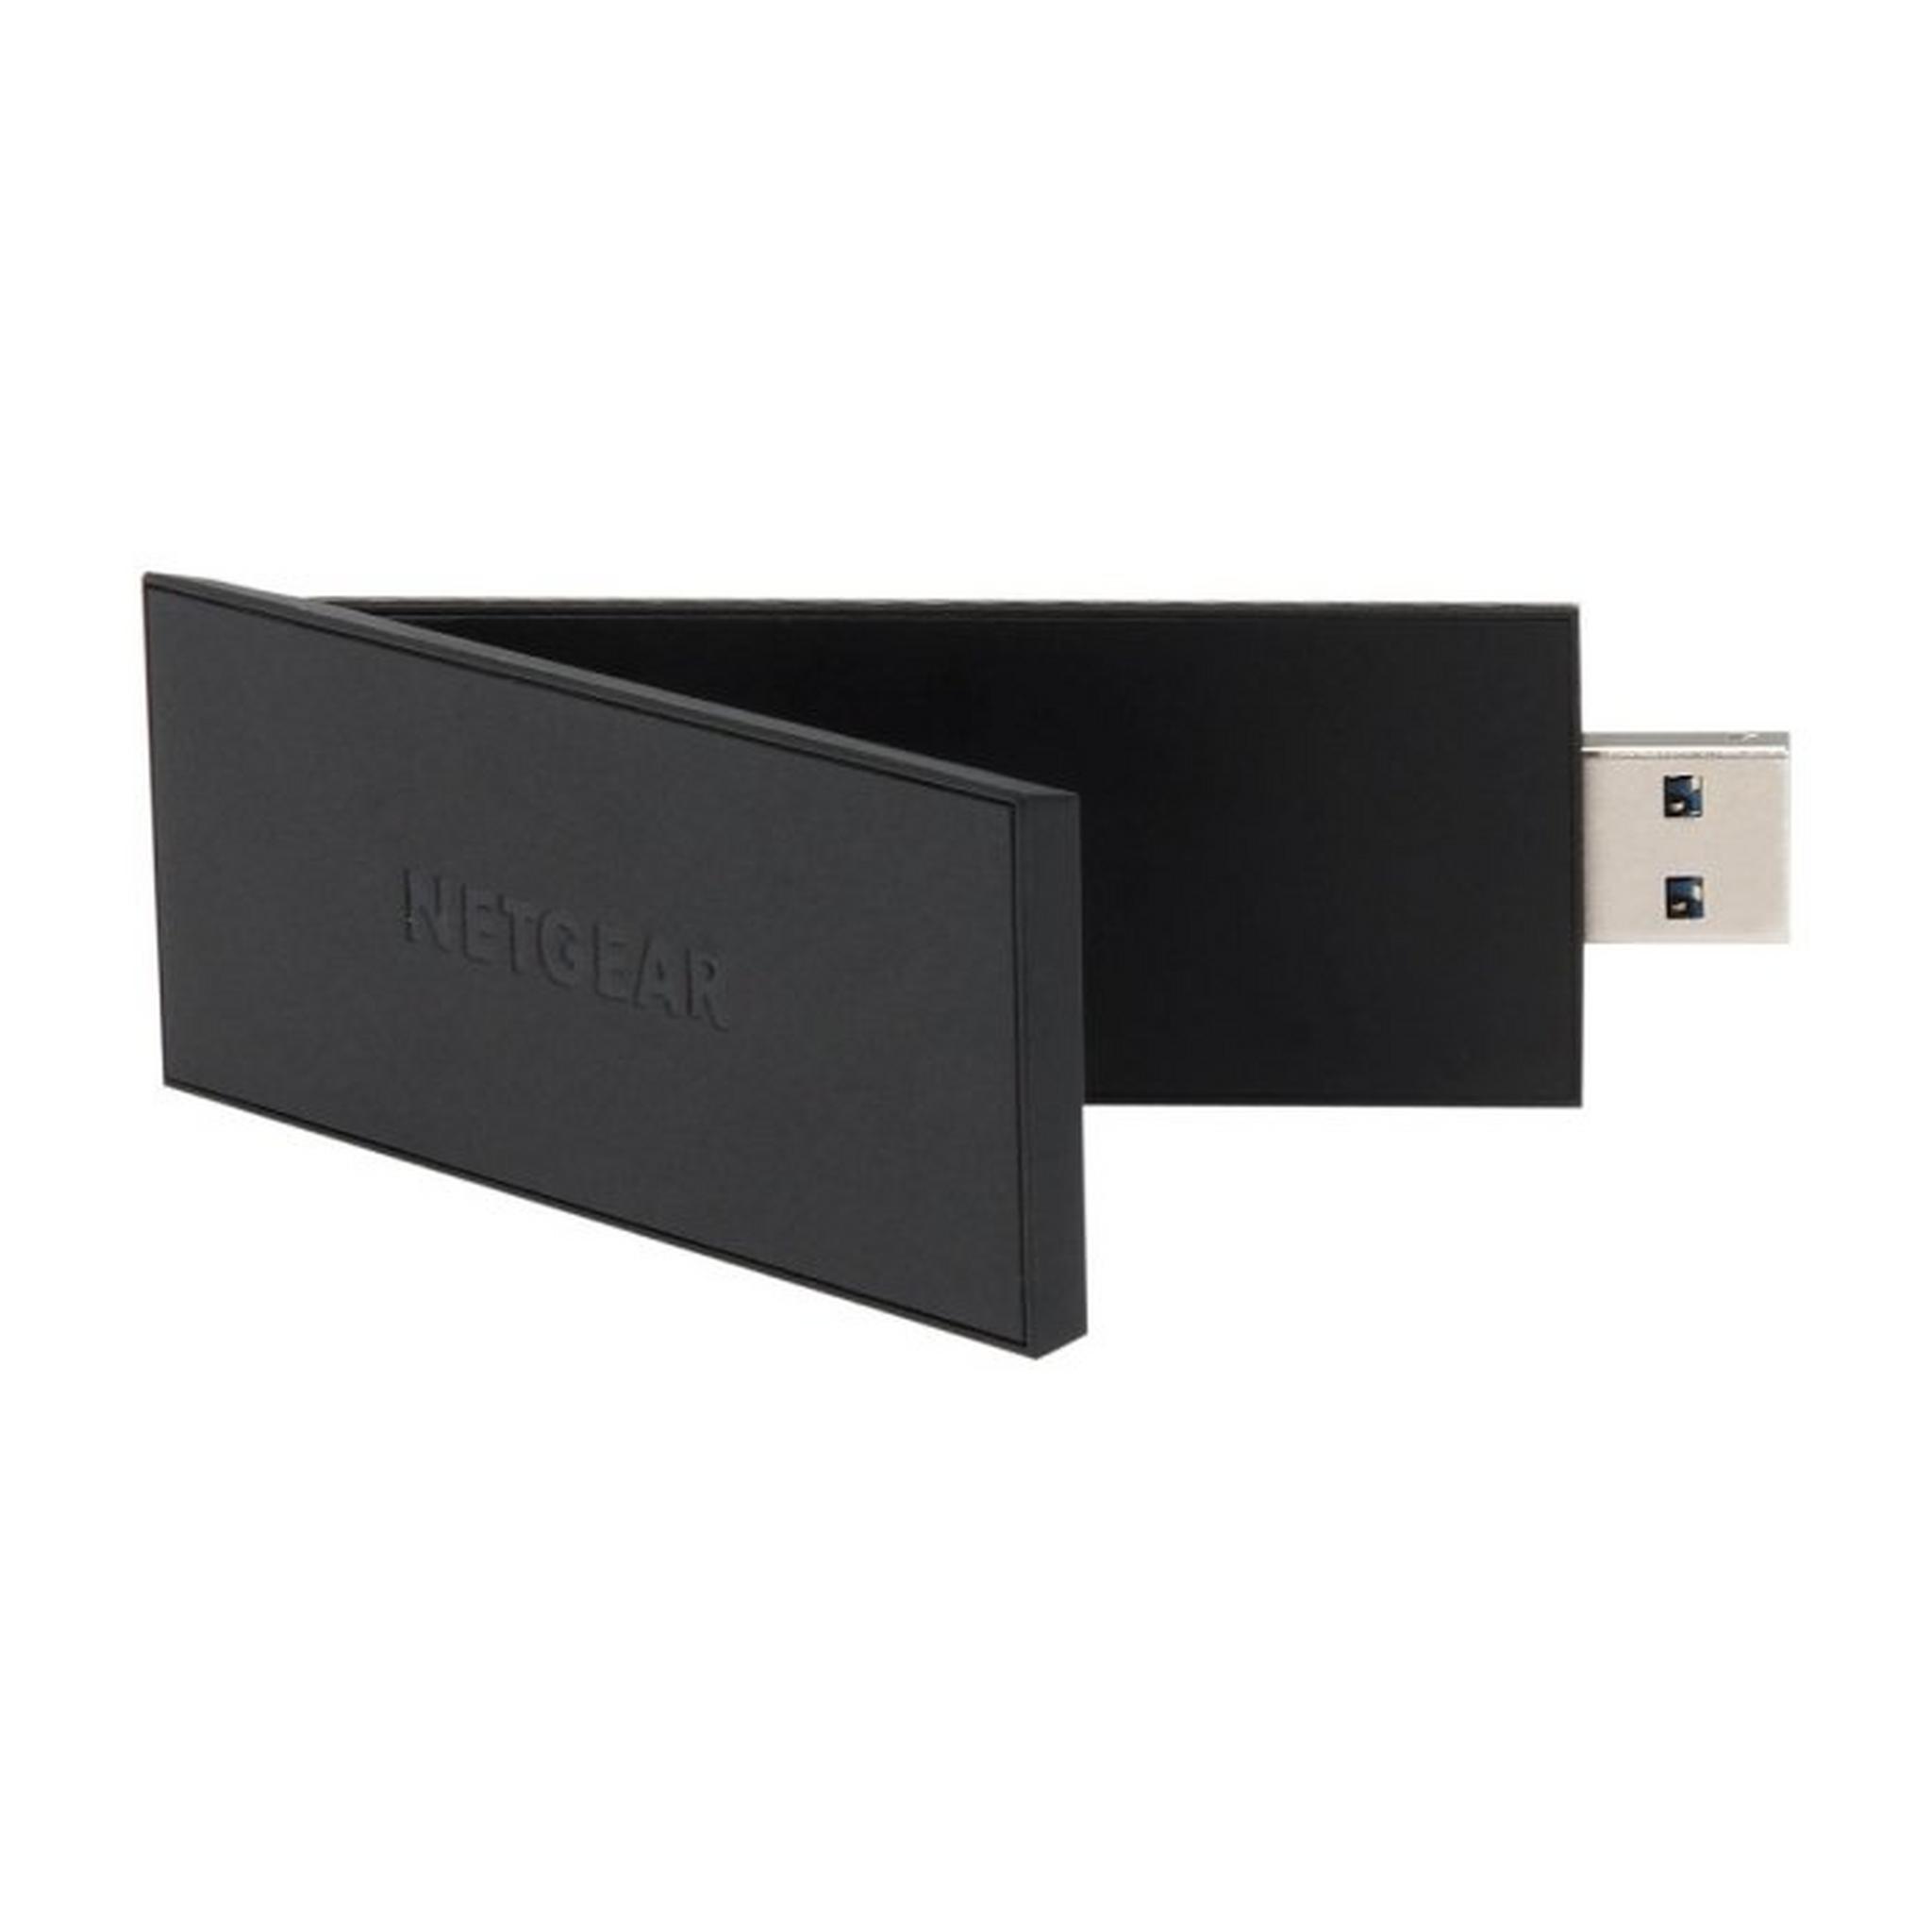 Netgear NG-A6210 1200AC 3.0 USB WiFi Adapter